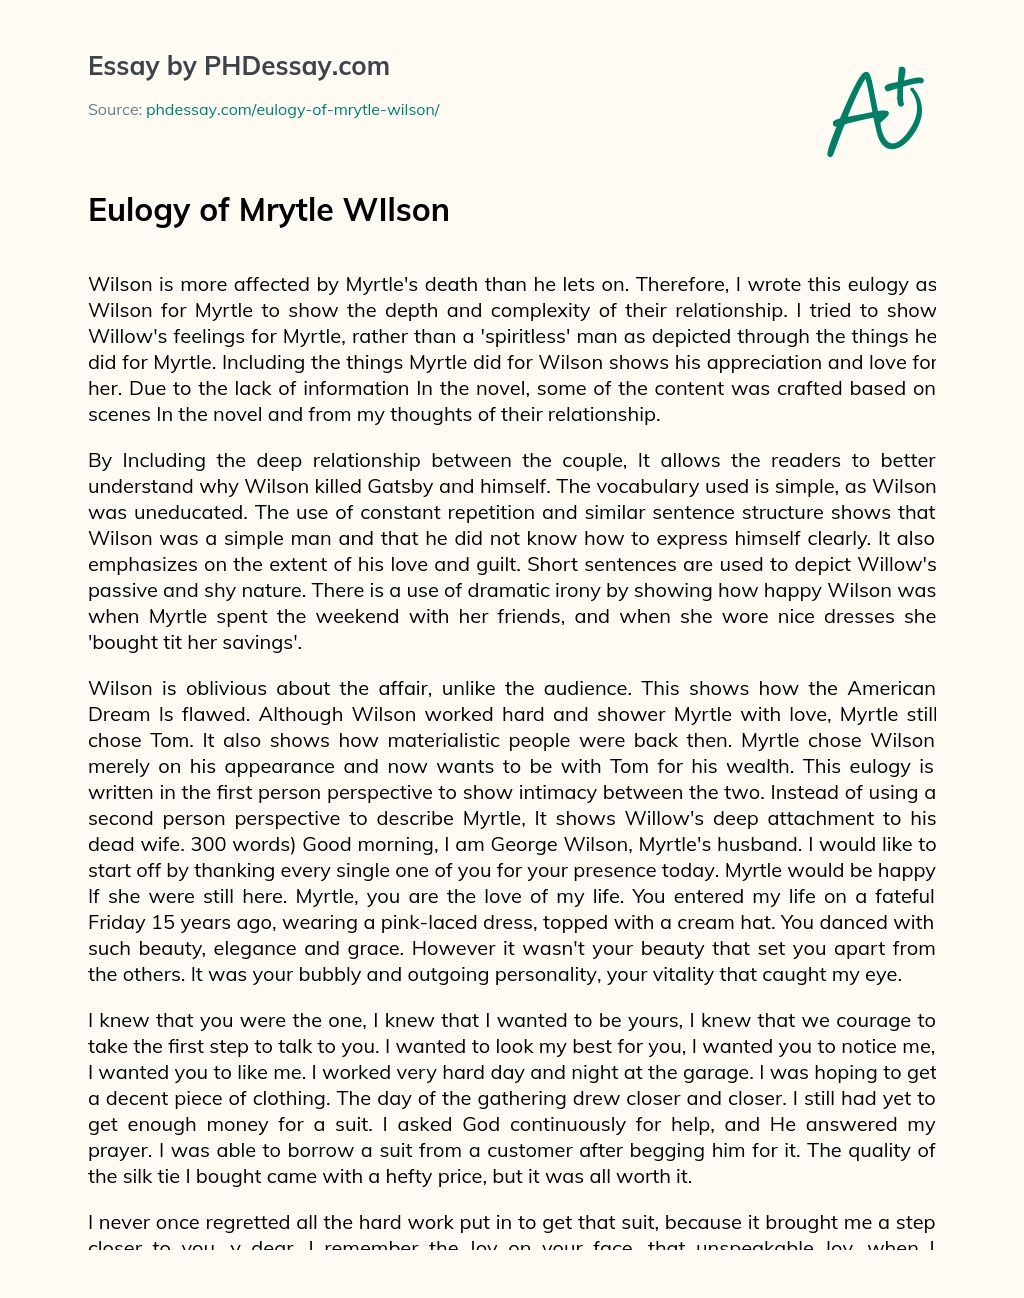 Eulogy of Mrytle WIlson essay